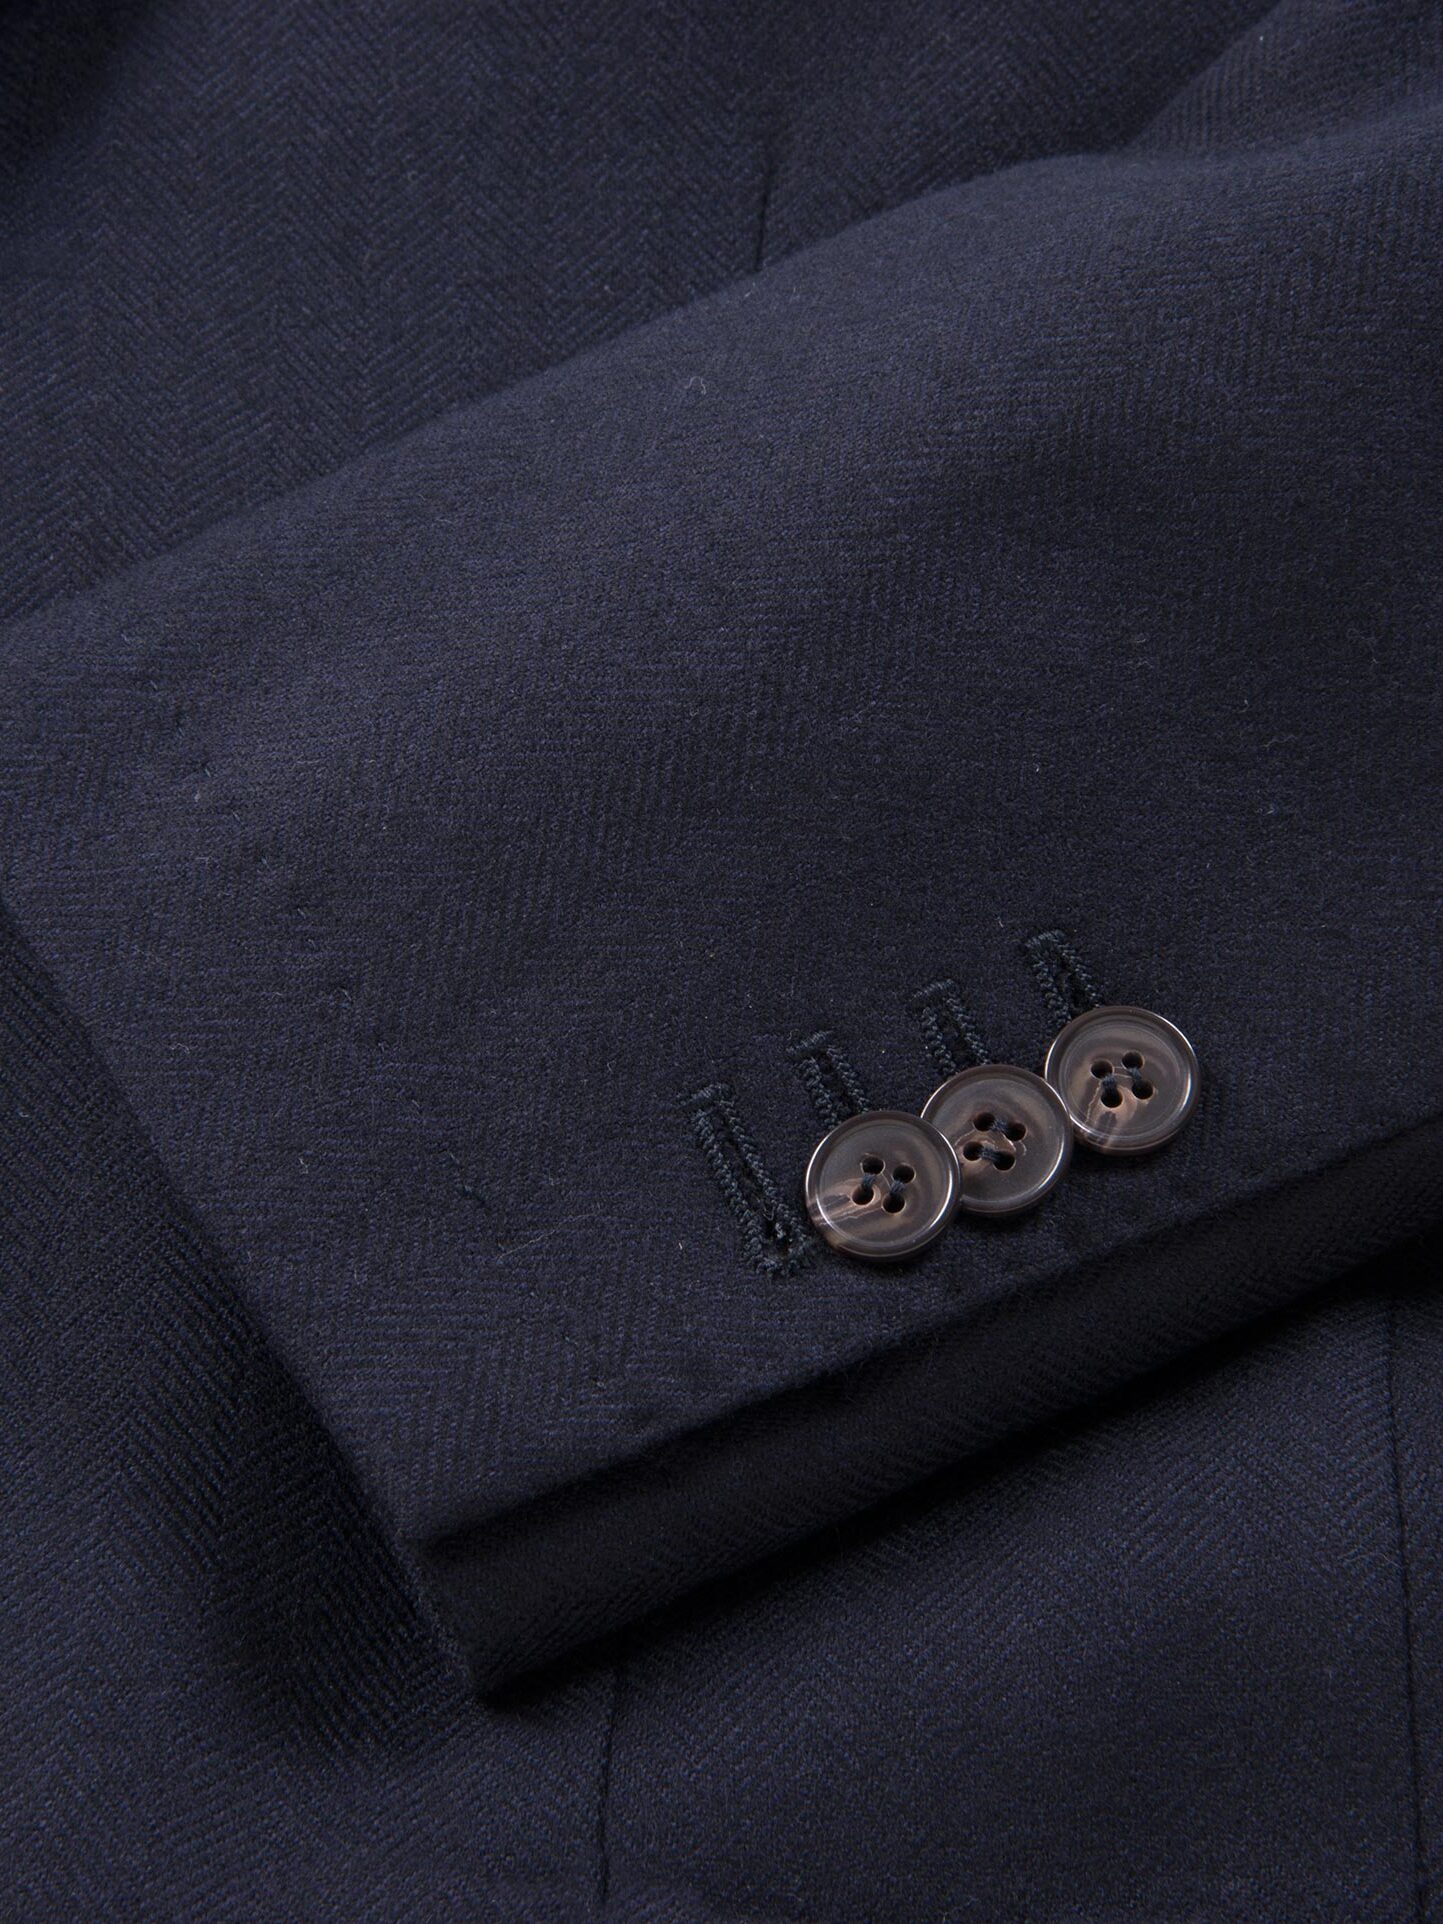 Charles Navy Herringbone Jacket by Proper Cloth